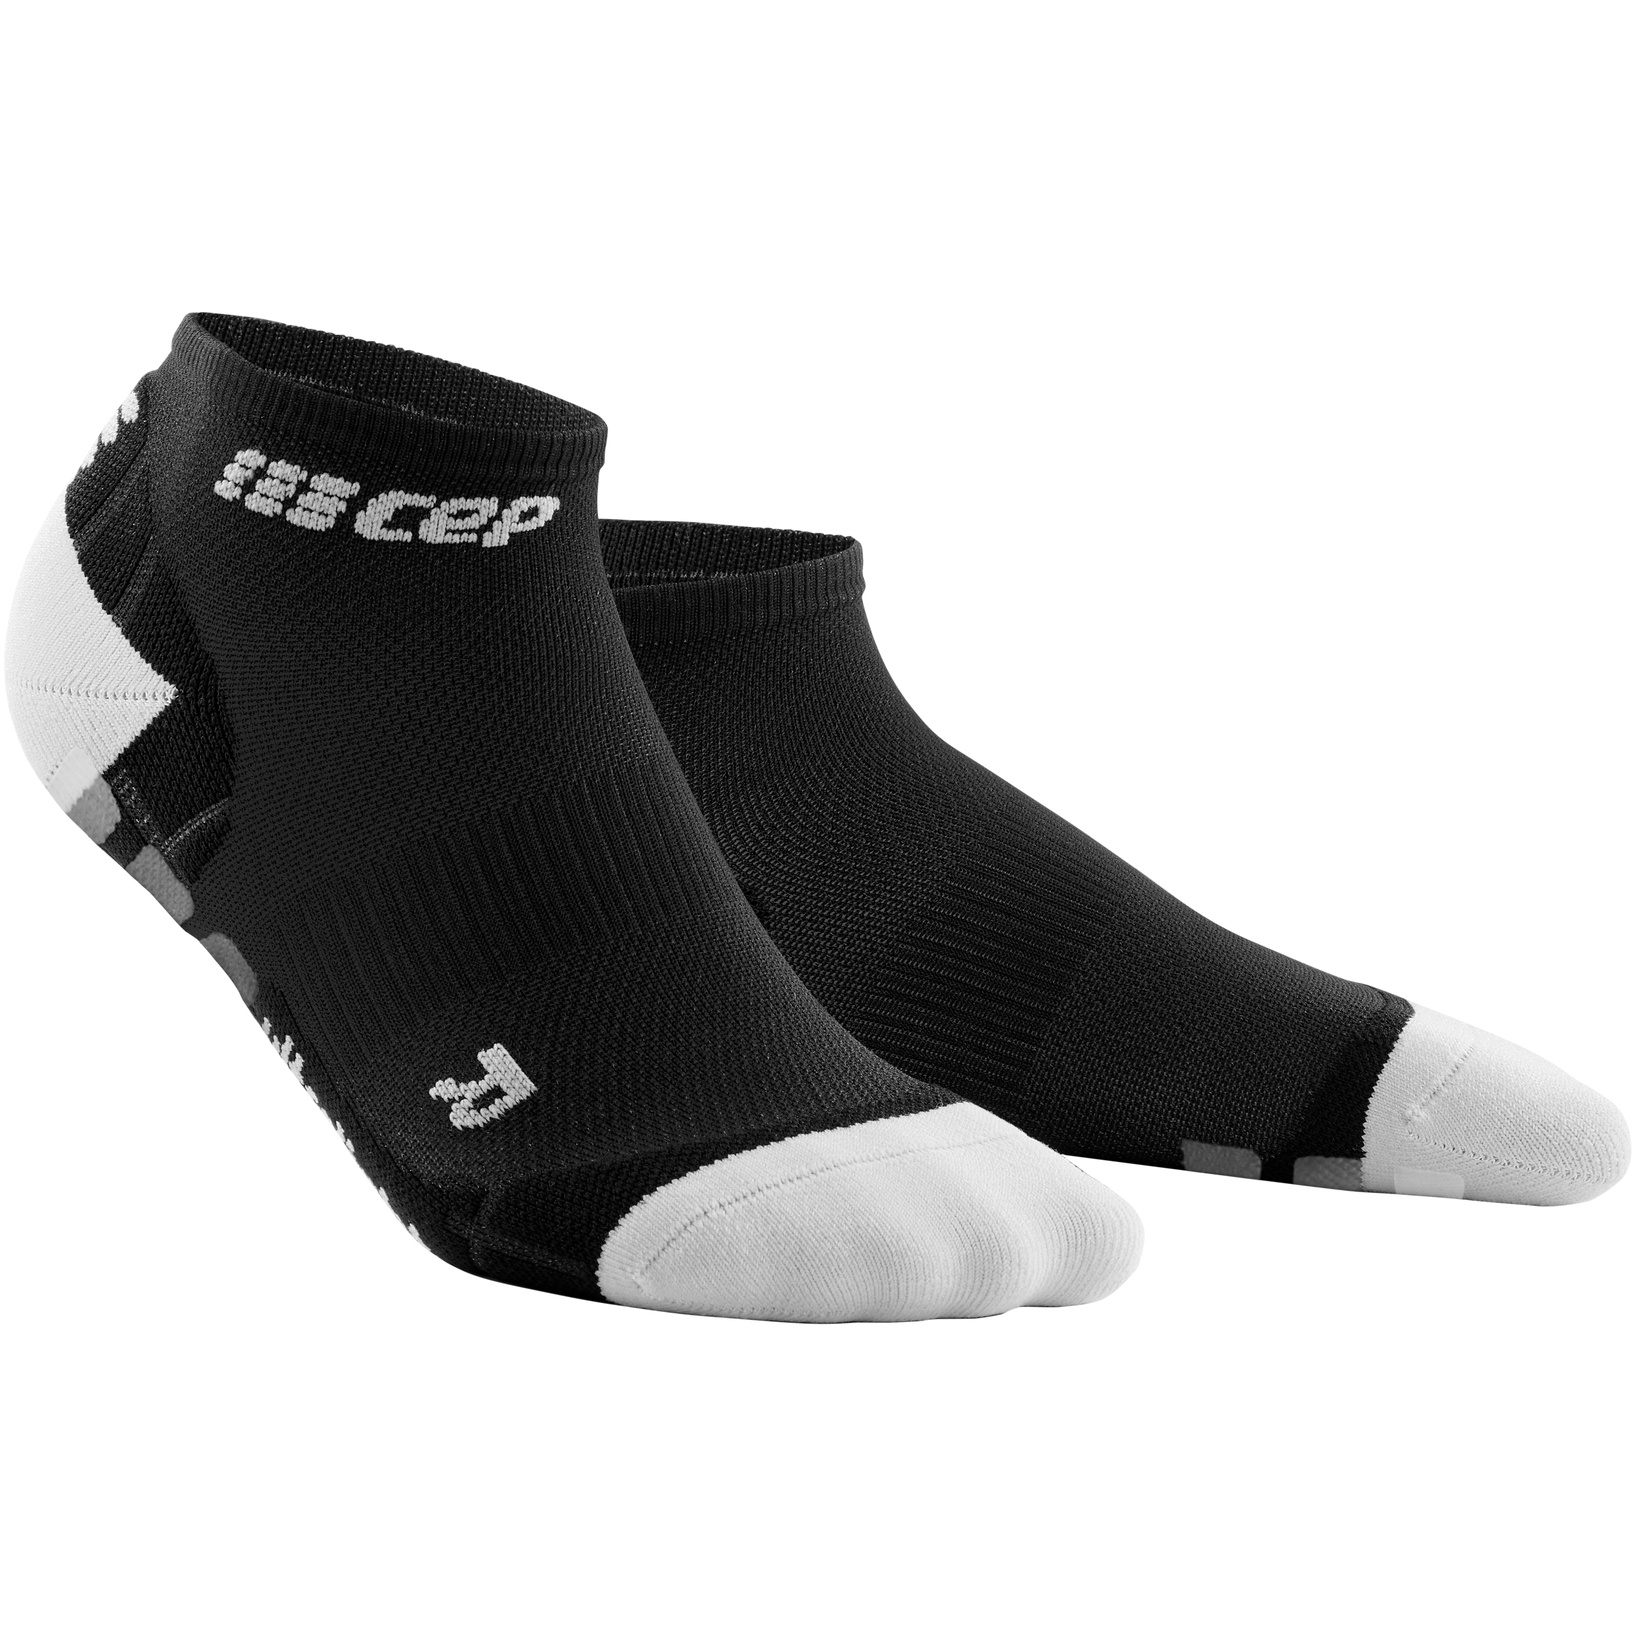 Image of CEP Ultralight Low Cut Compression Socks Women - black/light grey